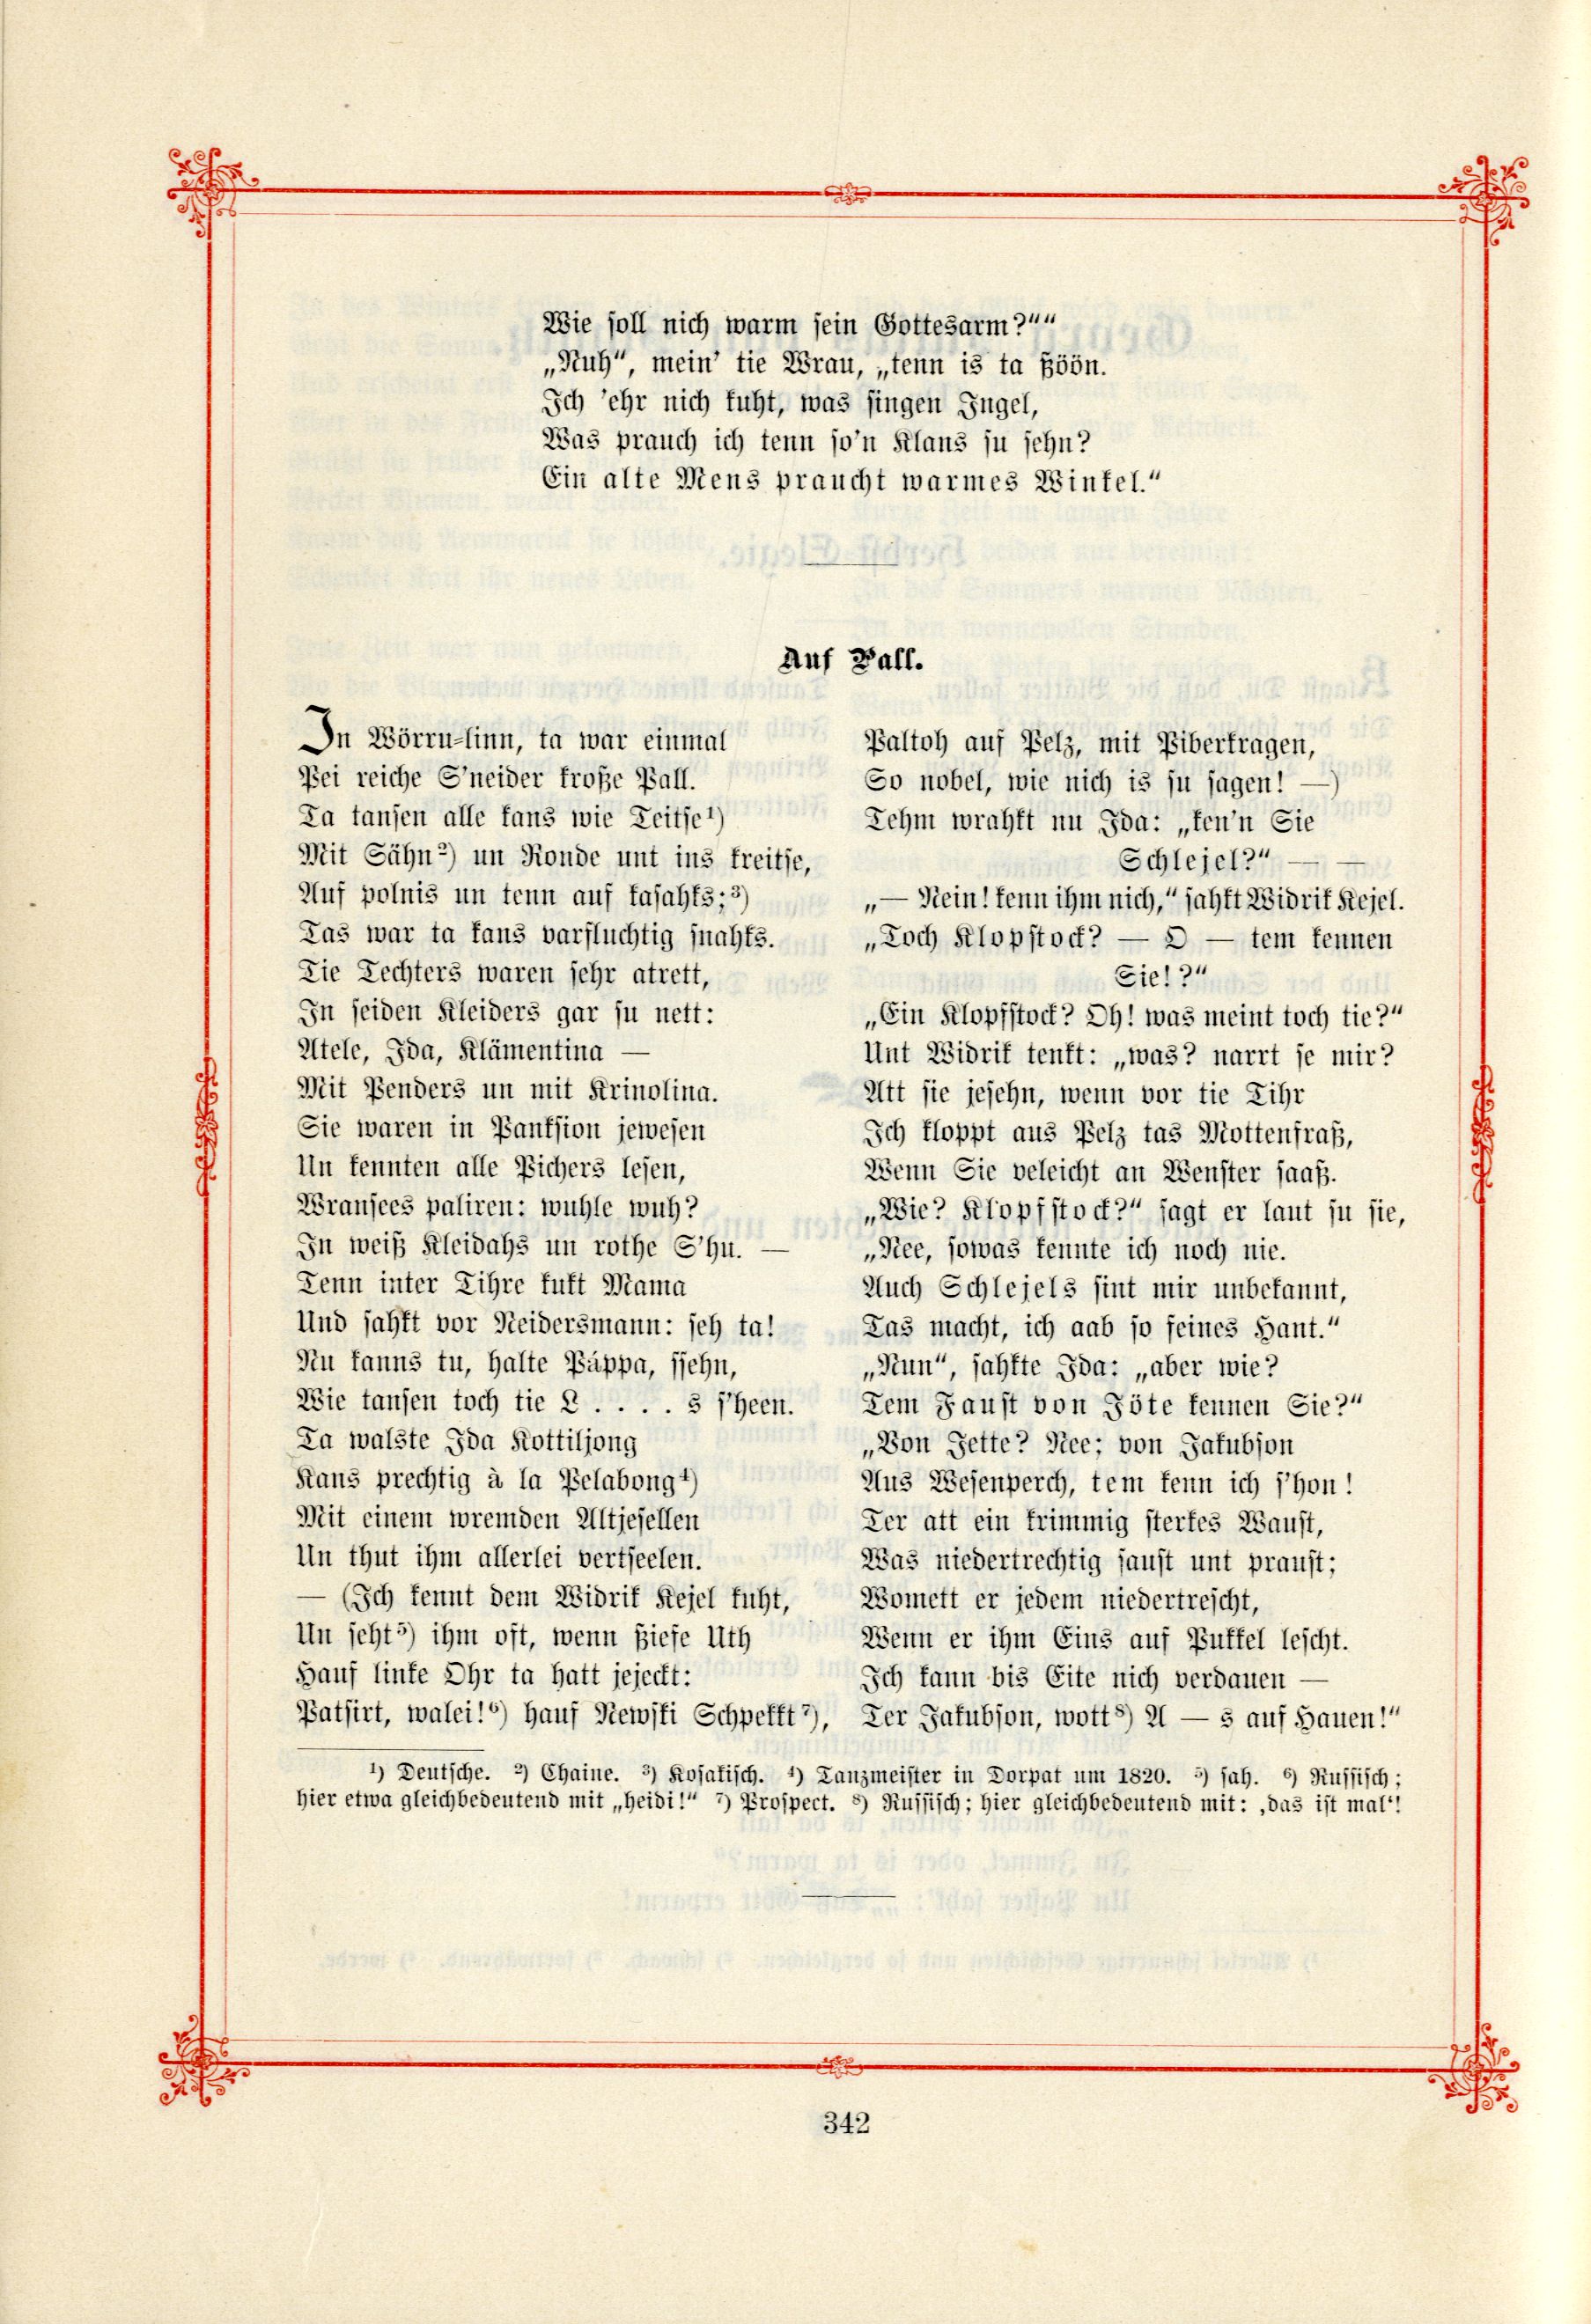 Auf Pall (1895) | 1. (342) Основной текст